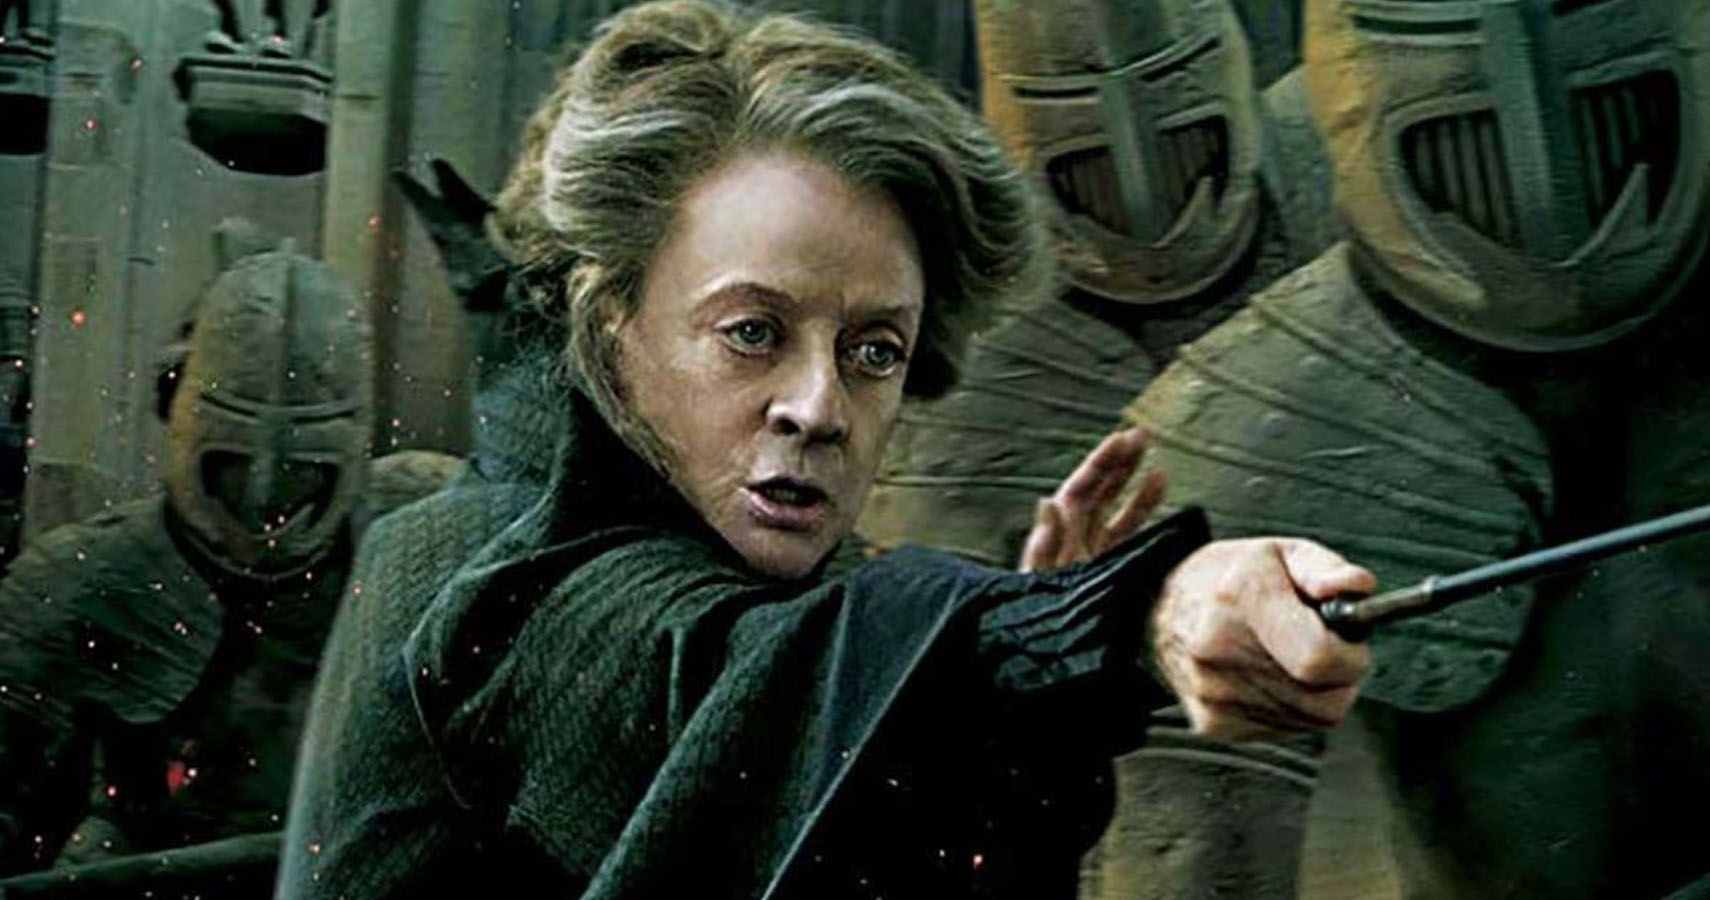 Harry Potter: Professor McGonagall's 10 Best Teaching Quotes At Hogwarts